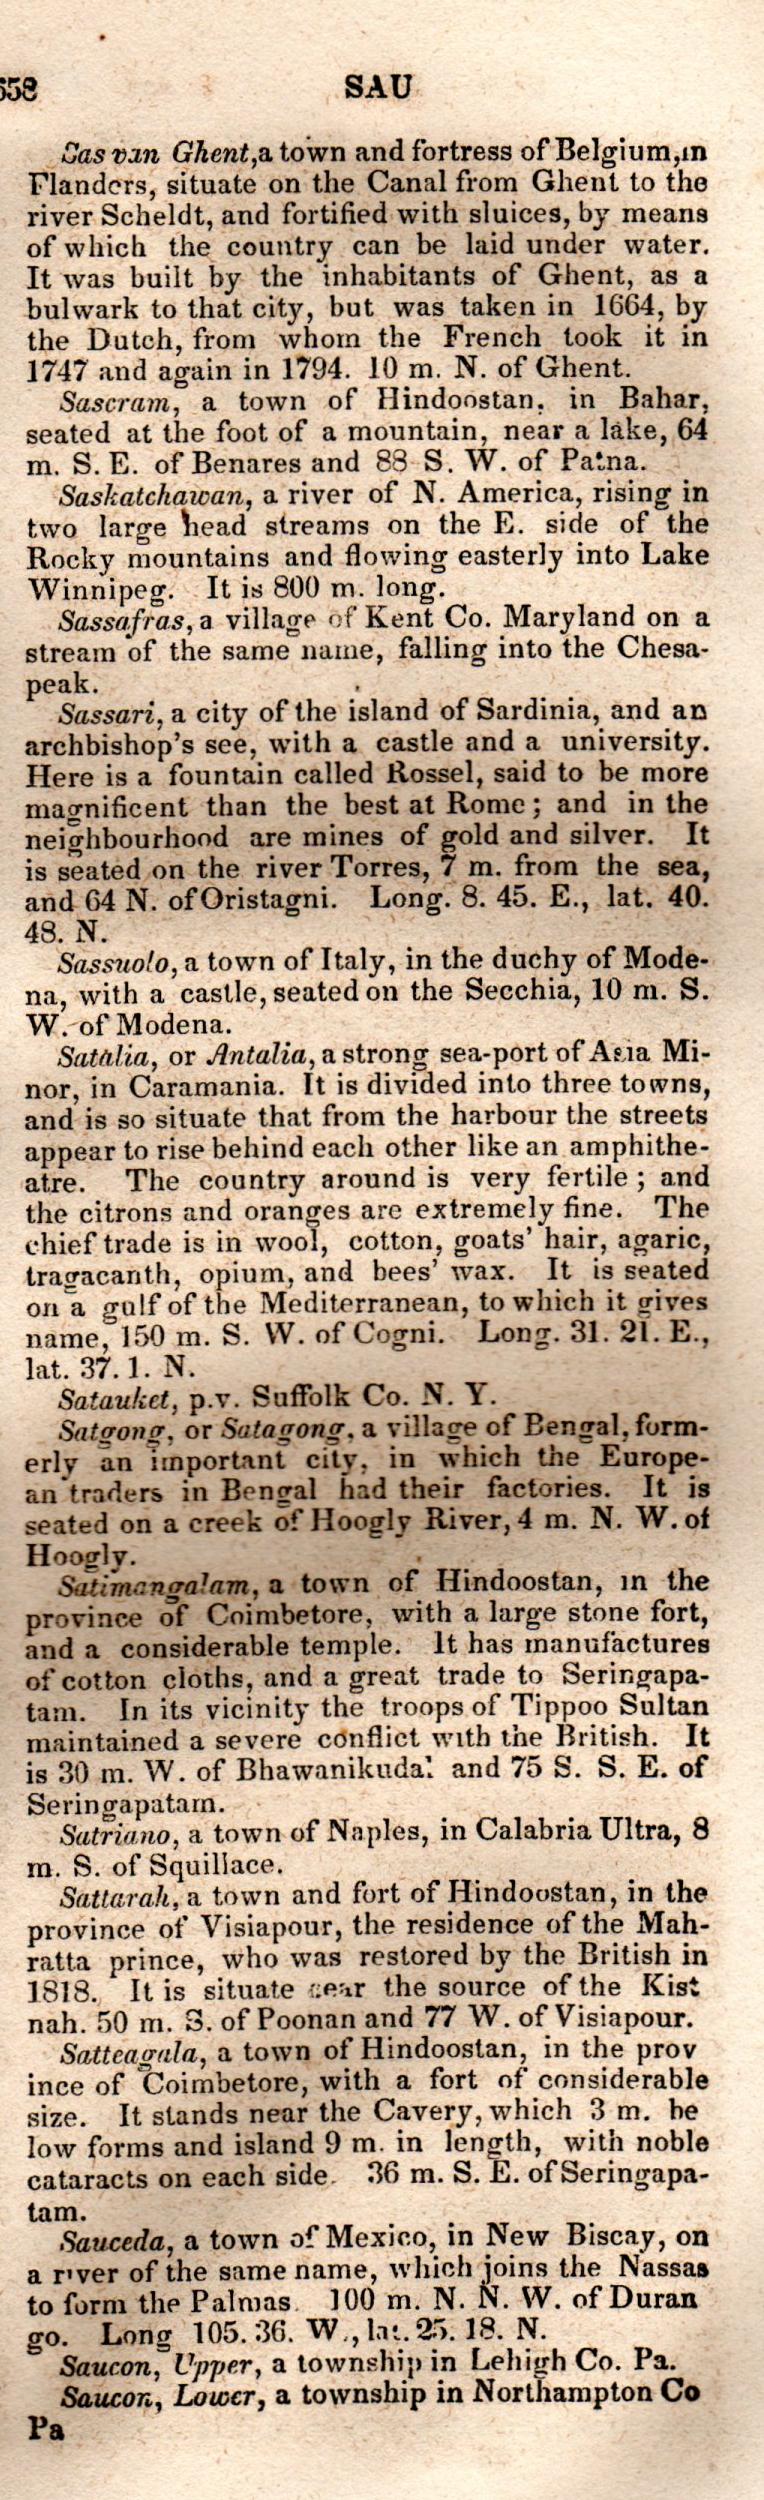 Brookes’ Universal Gazetteer (1850), Page 658 Right Column